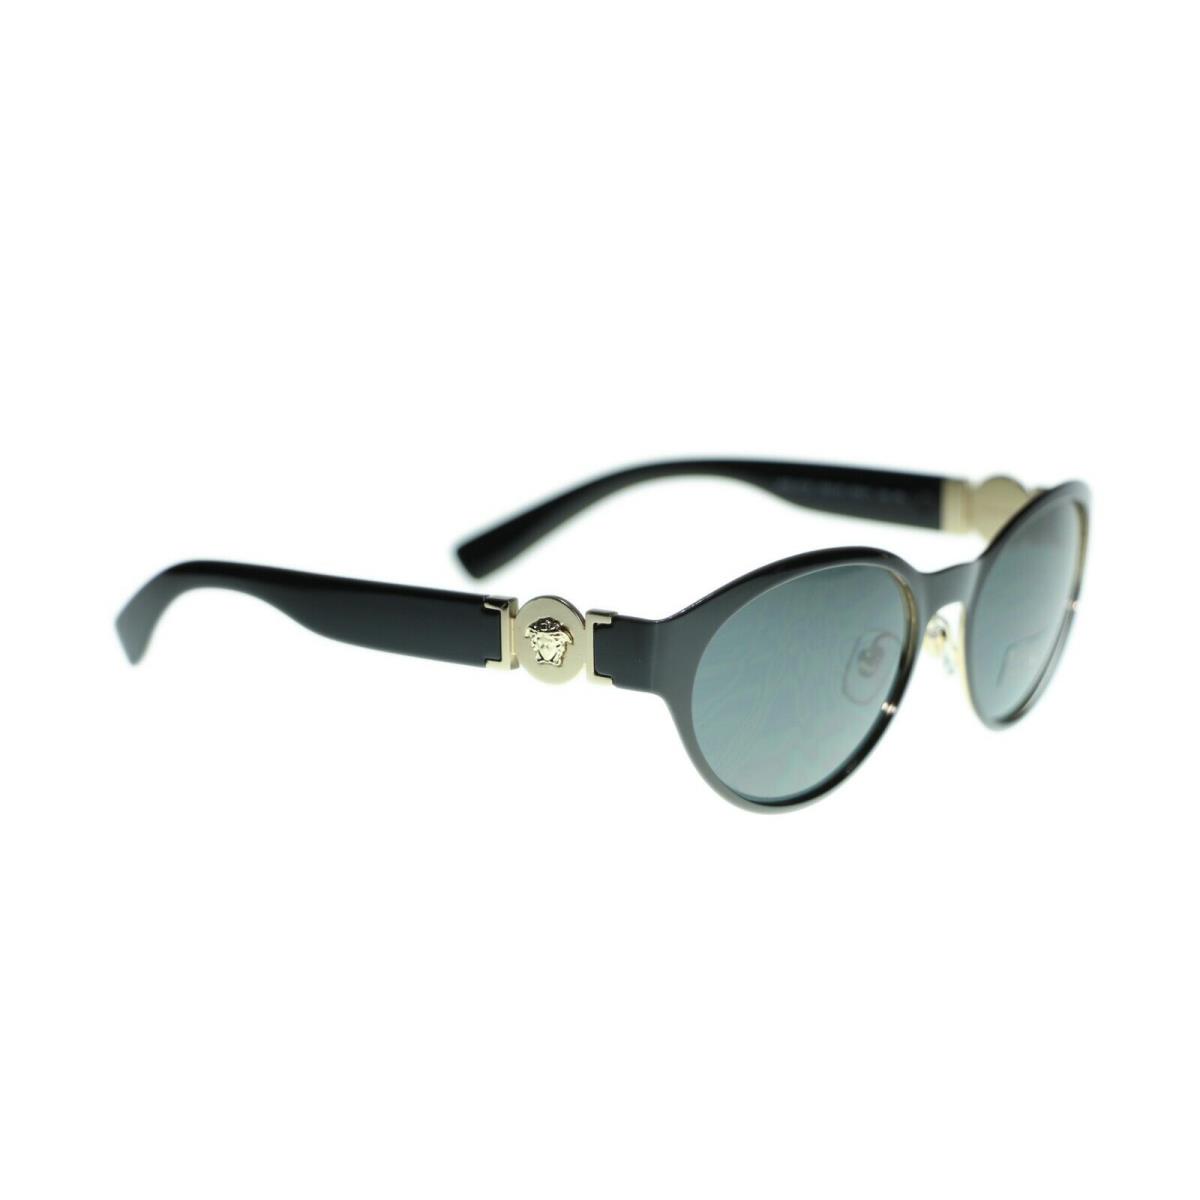 Versace Unisex Sunglasses VE2179 Cateye Oval Frame 55mm